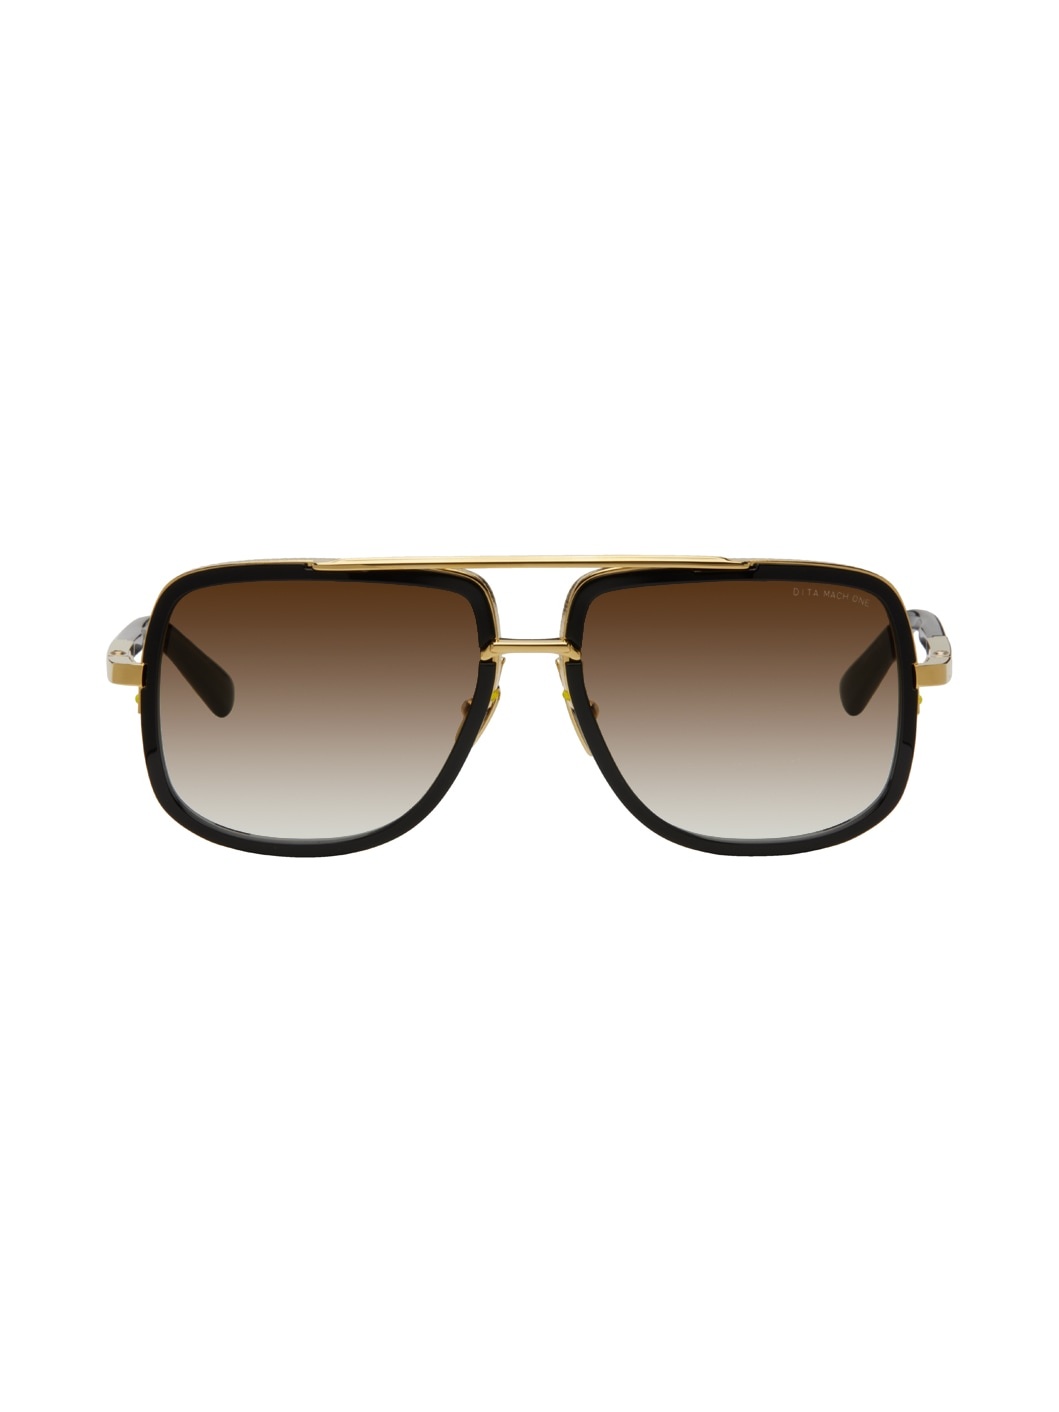 Black & Gold Mach-One Sunglasses - 1